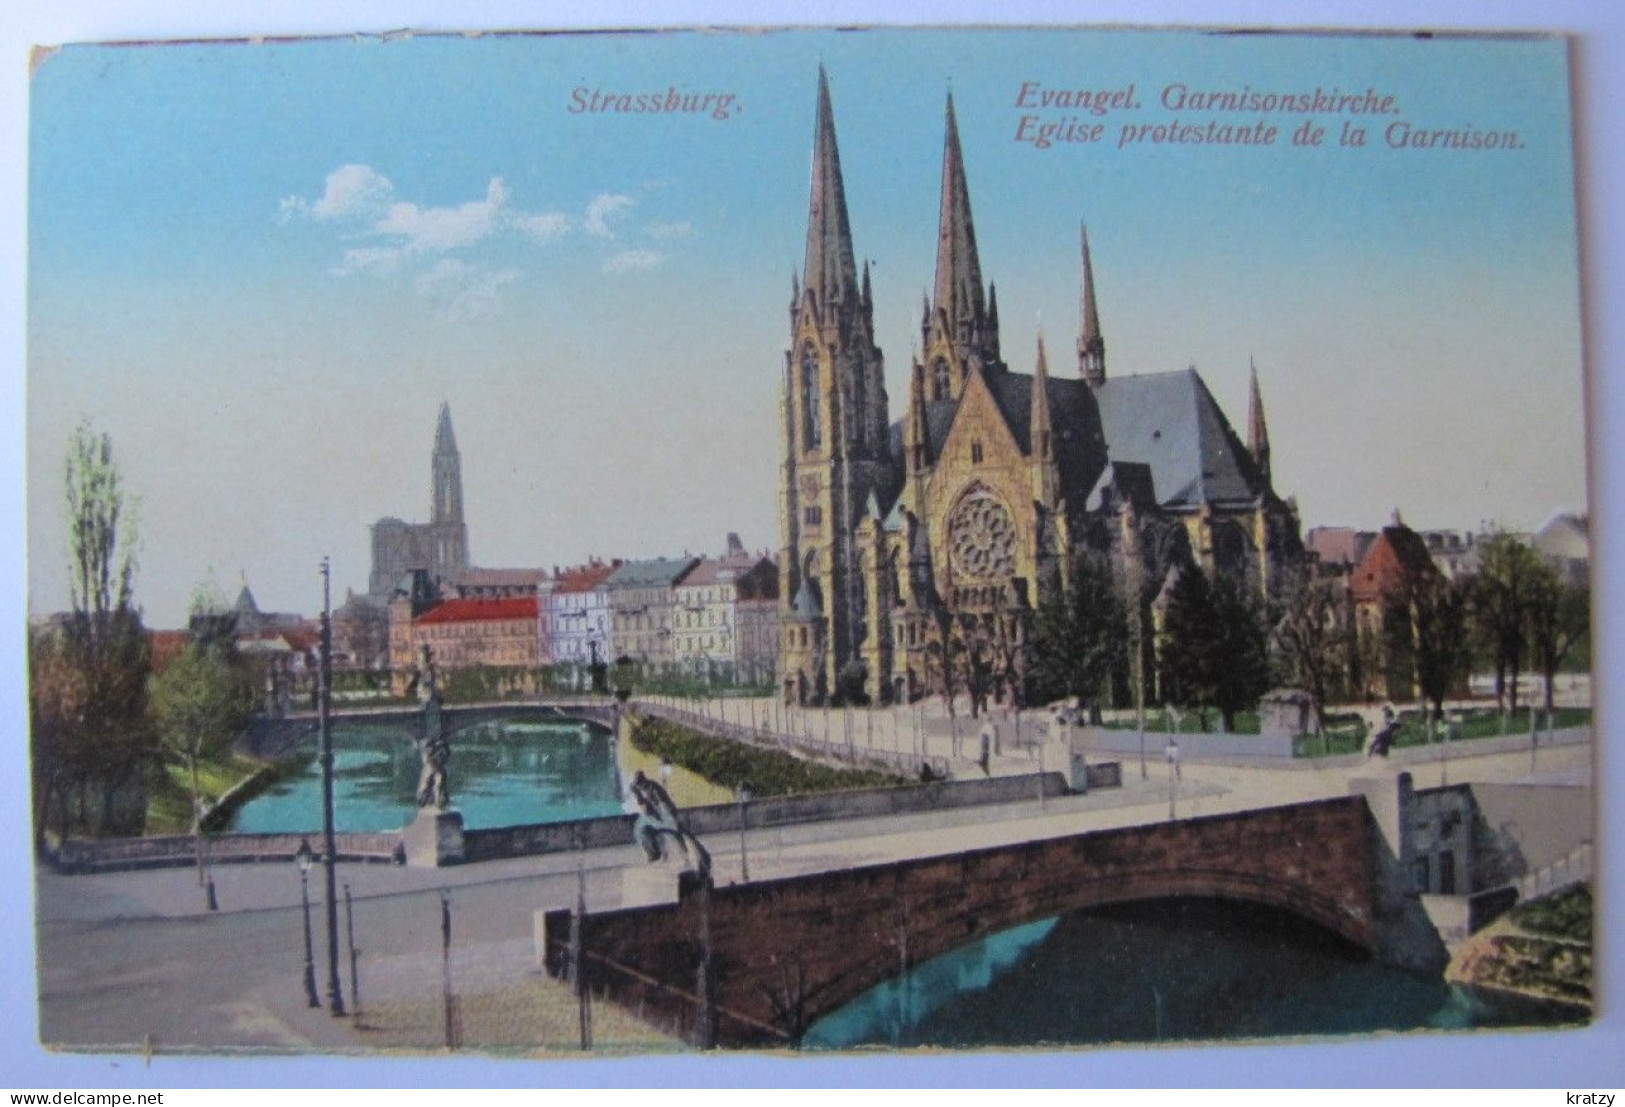 FRANCE - BAS RHIN - STRASBOURG - Eglise Protestante De La Garnison - Strasbourg